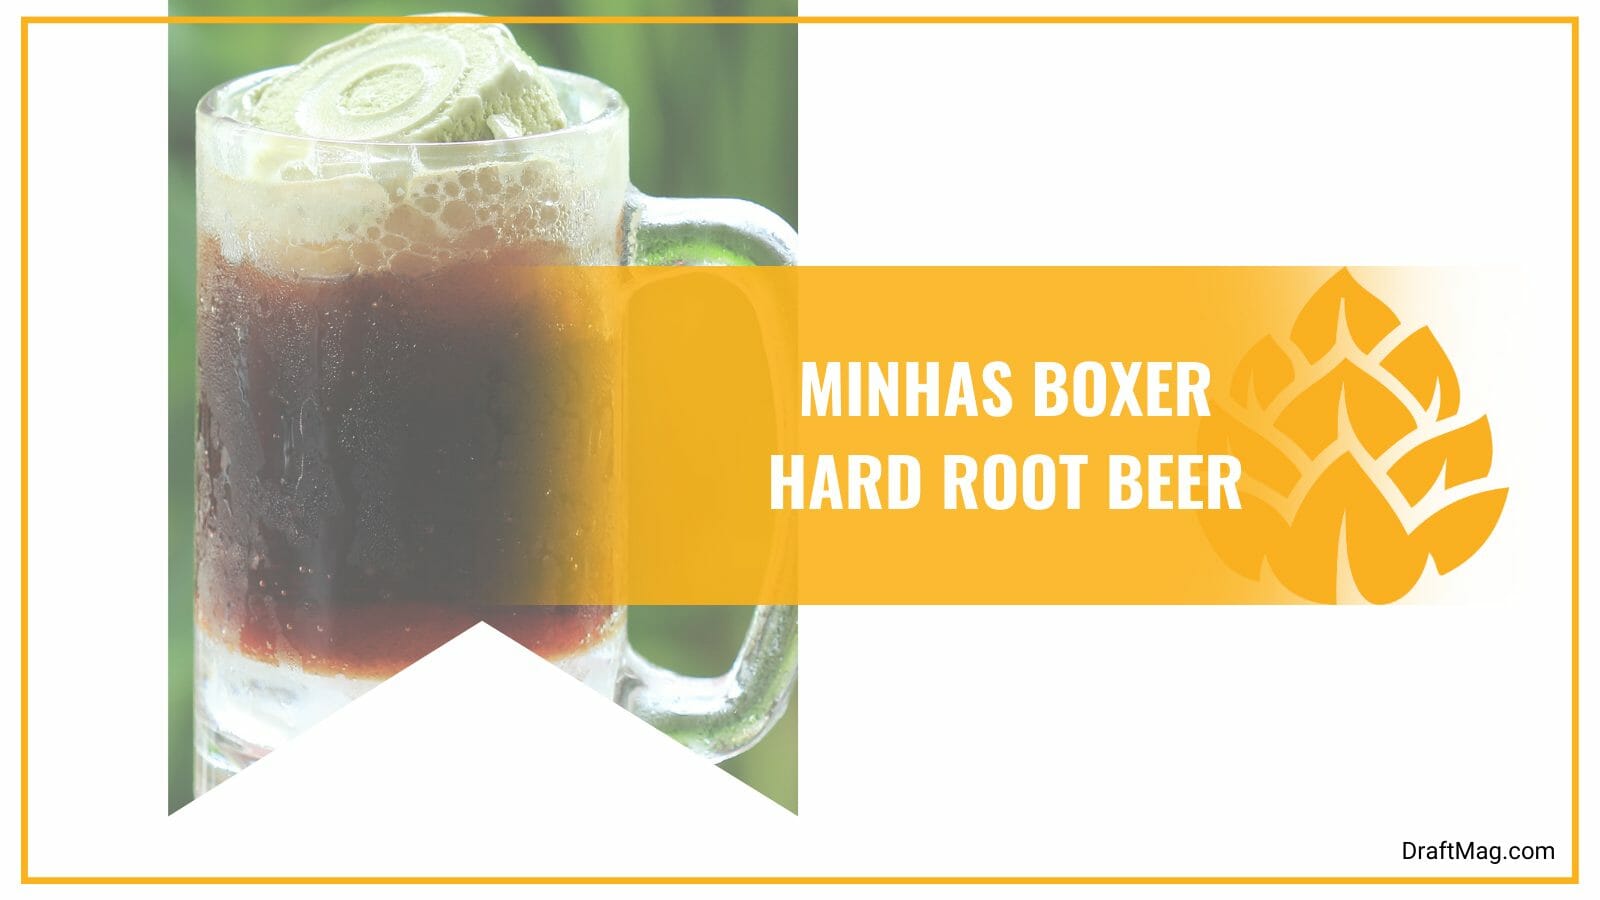 Minhas boxer hard root beer